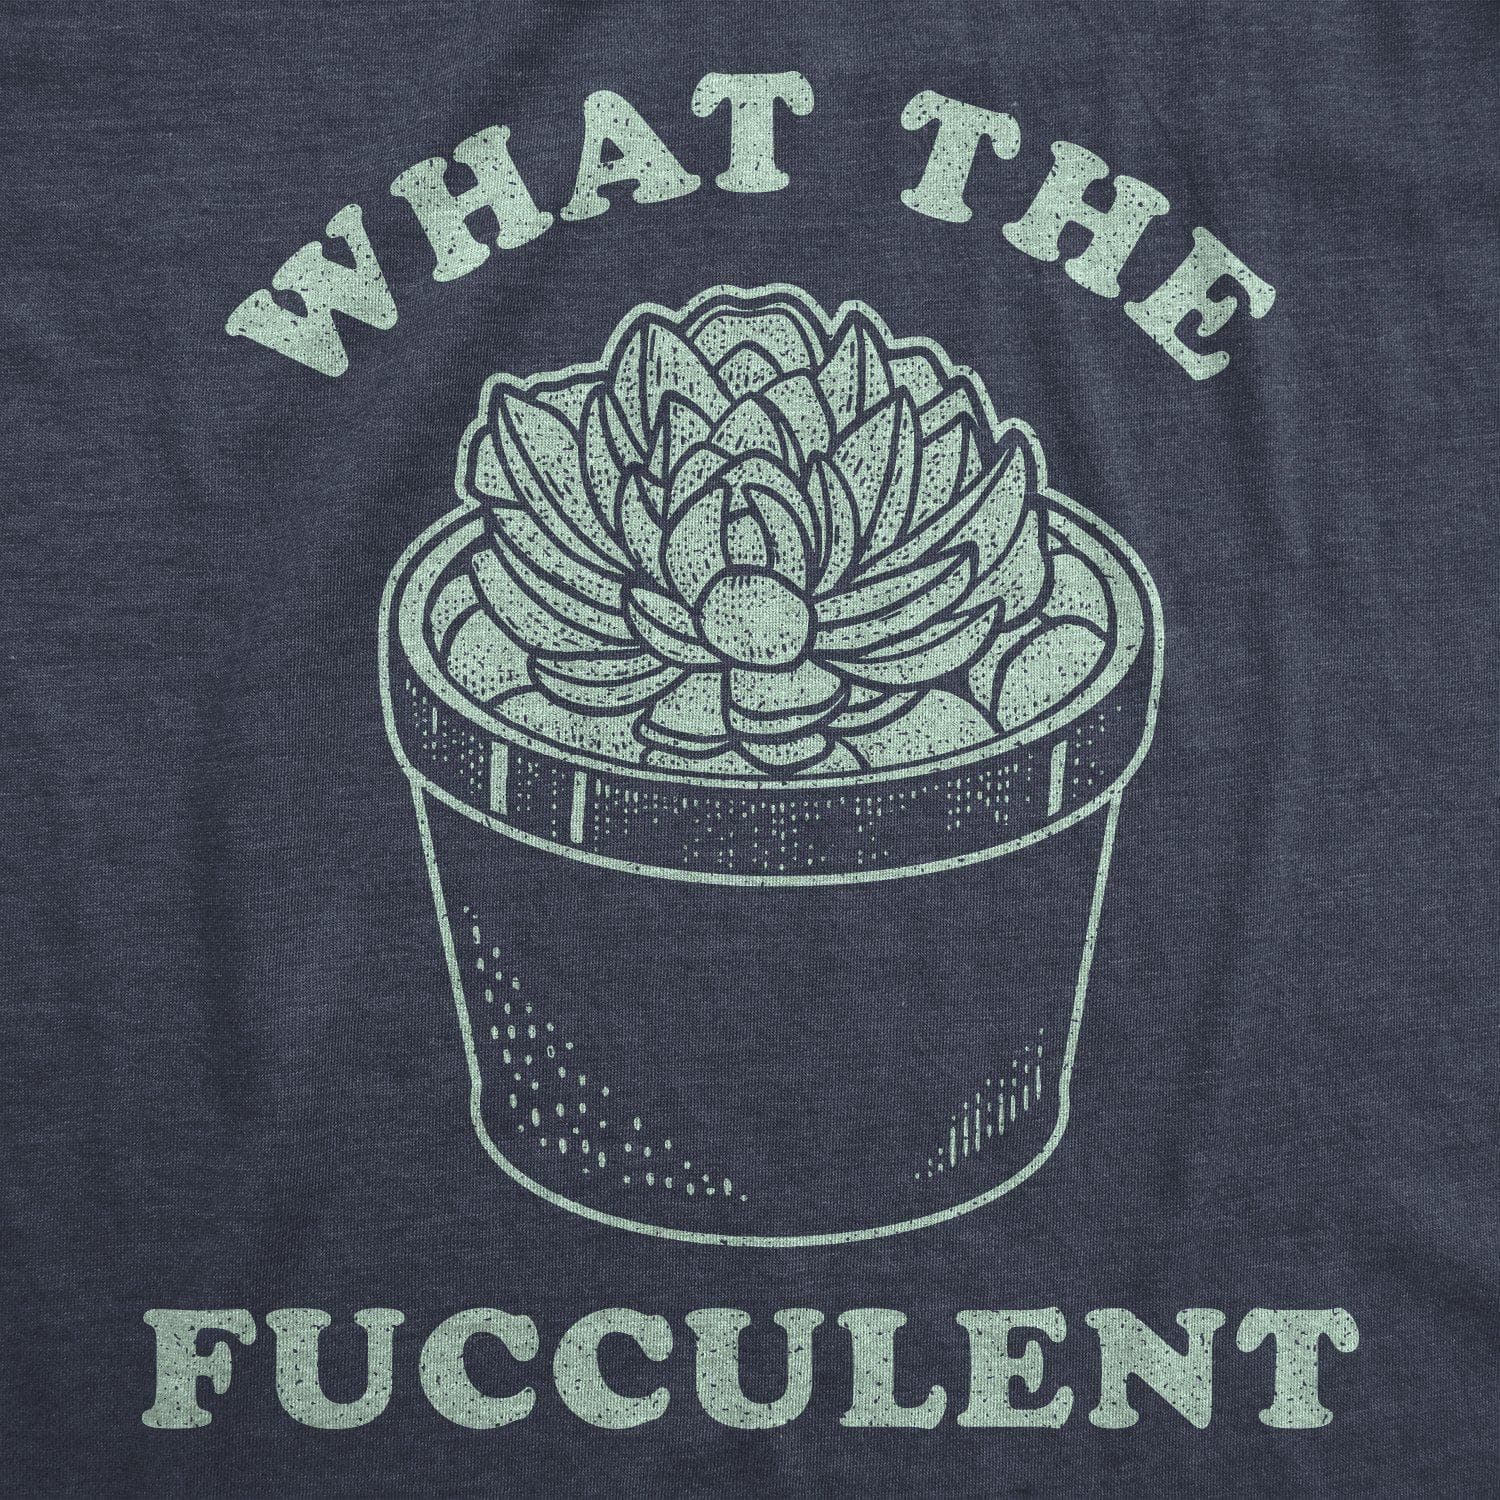 What The Fucculent Men's Tshirt - Crazy Dog T-Shirts